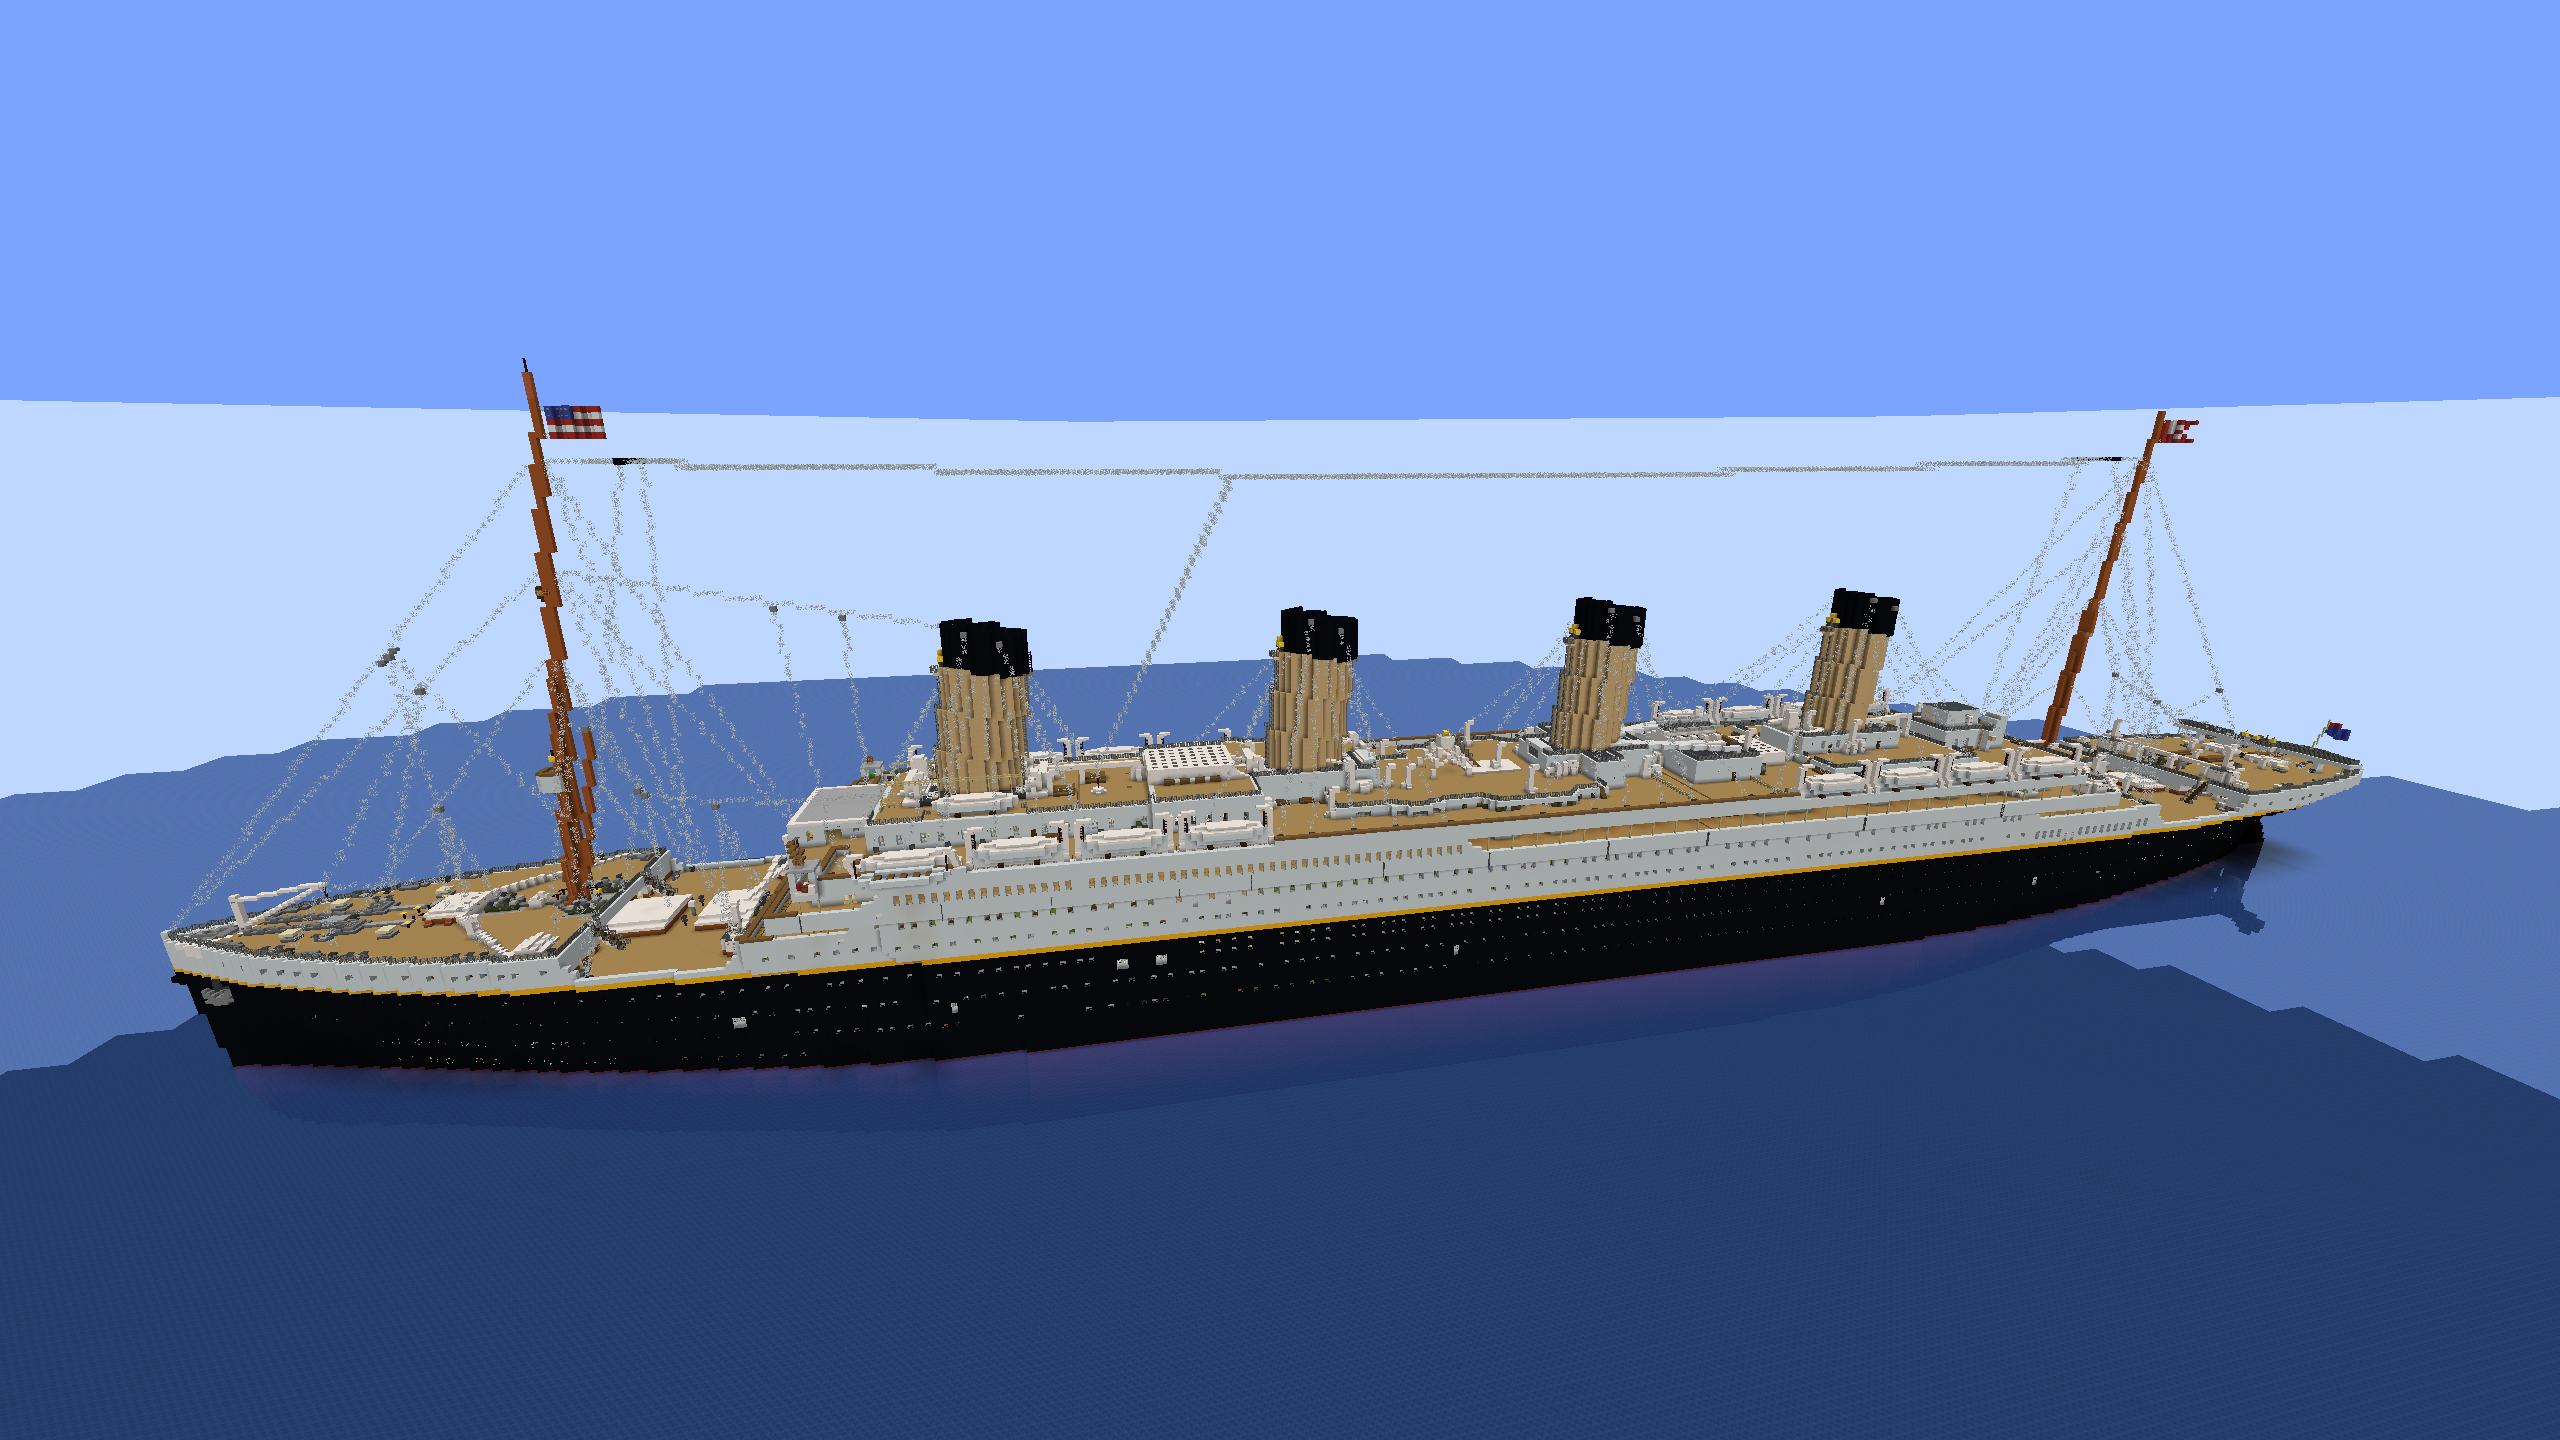 Minecract RMS Titanic schematic (litematic)